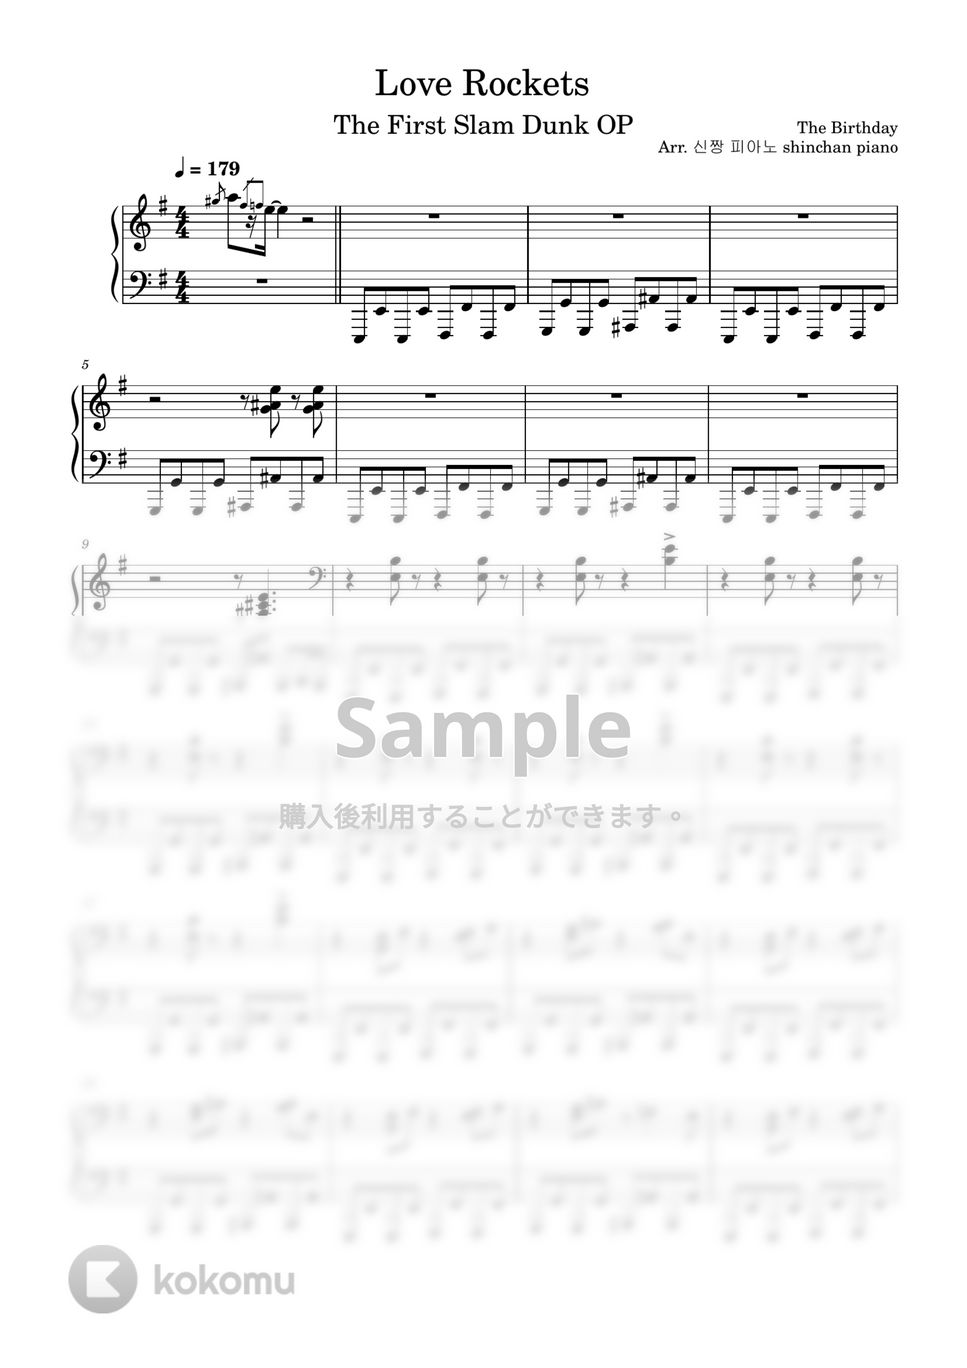 The Birthday - Love Rockets (ザ・ファースト スラムダンクOP) by しんちゃんピアノ